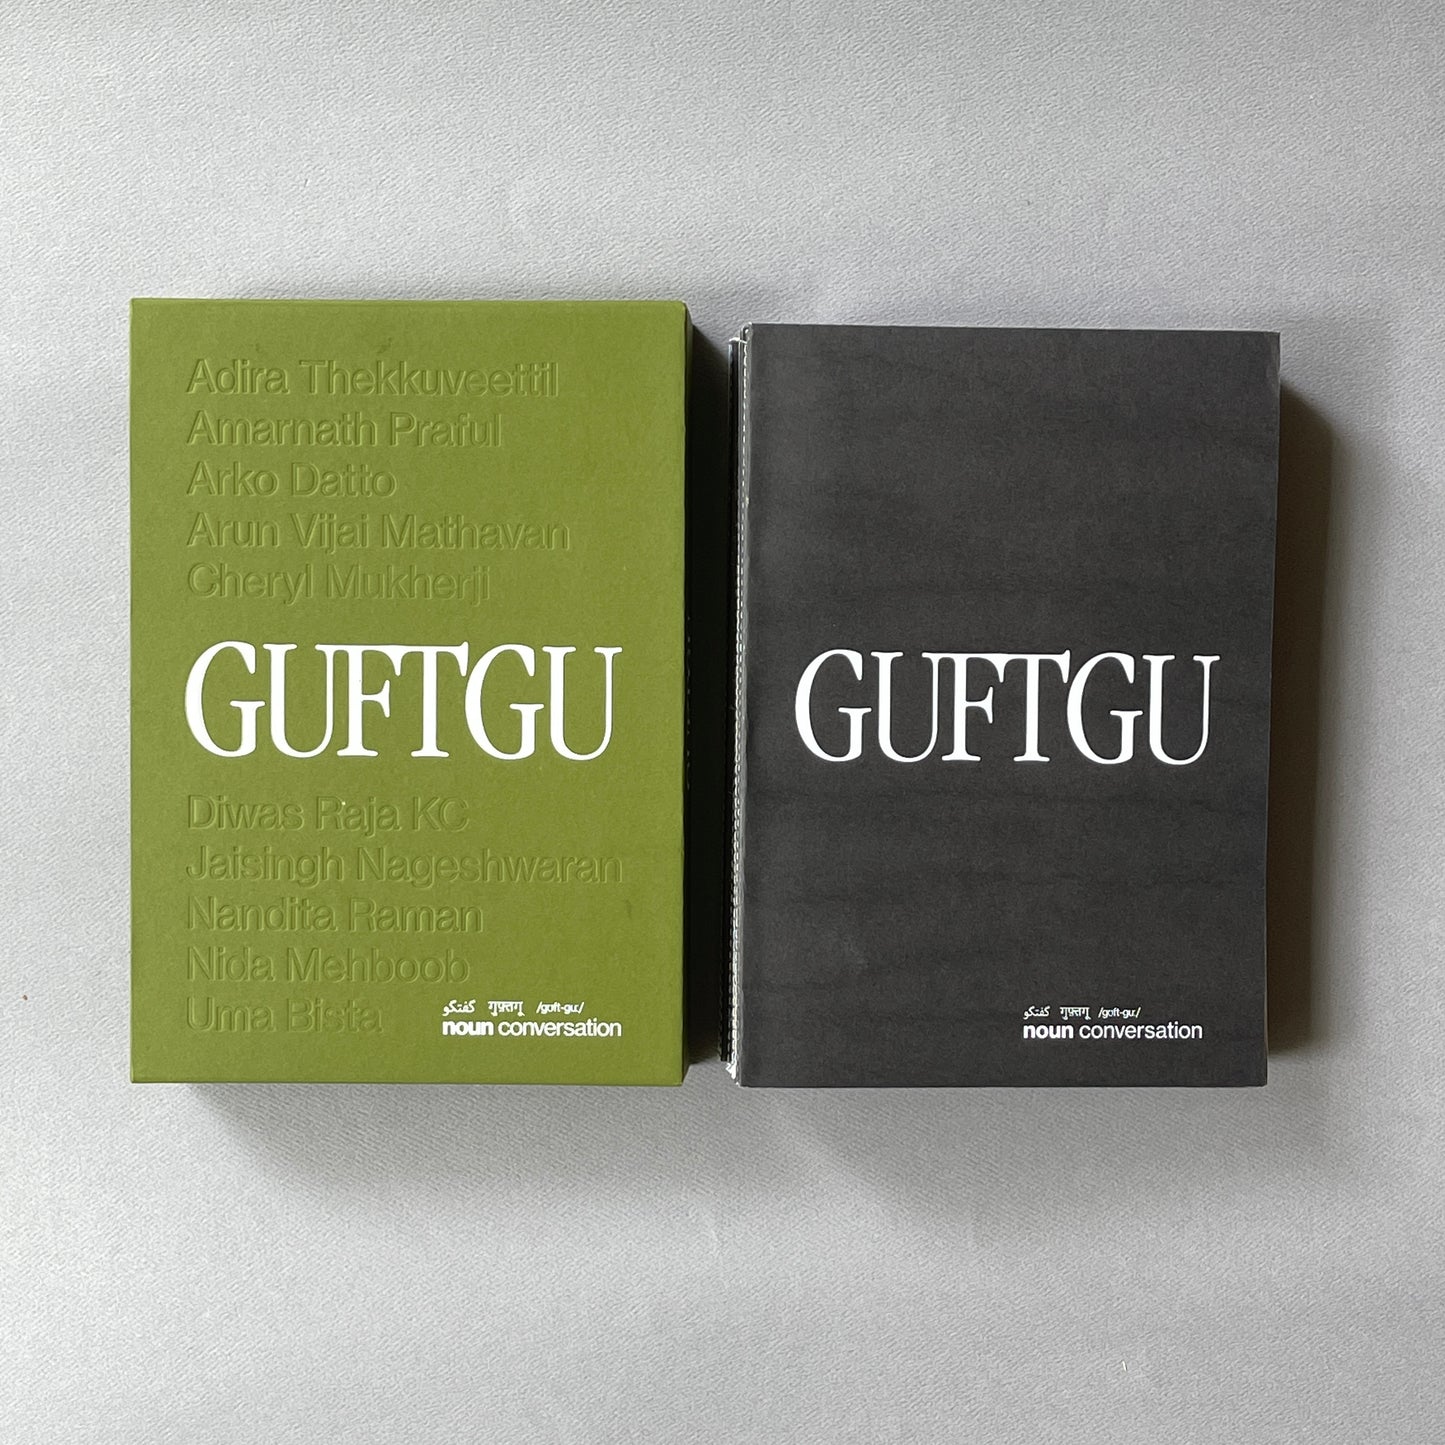 GUFTGU - OFFSET PROJECTS